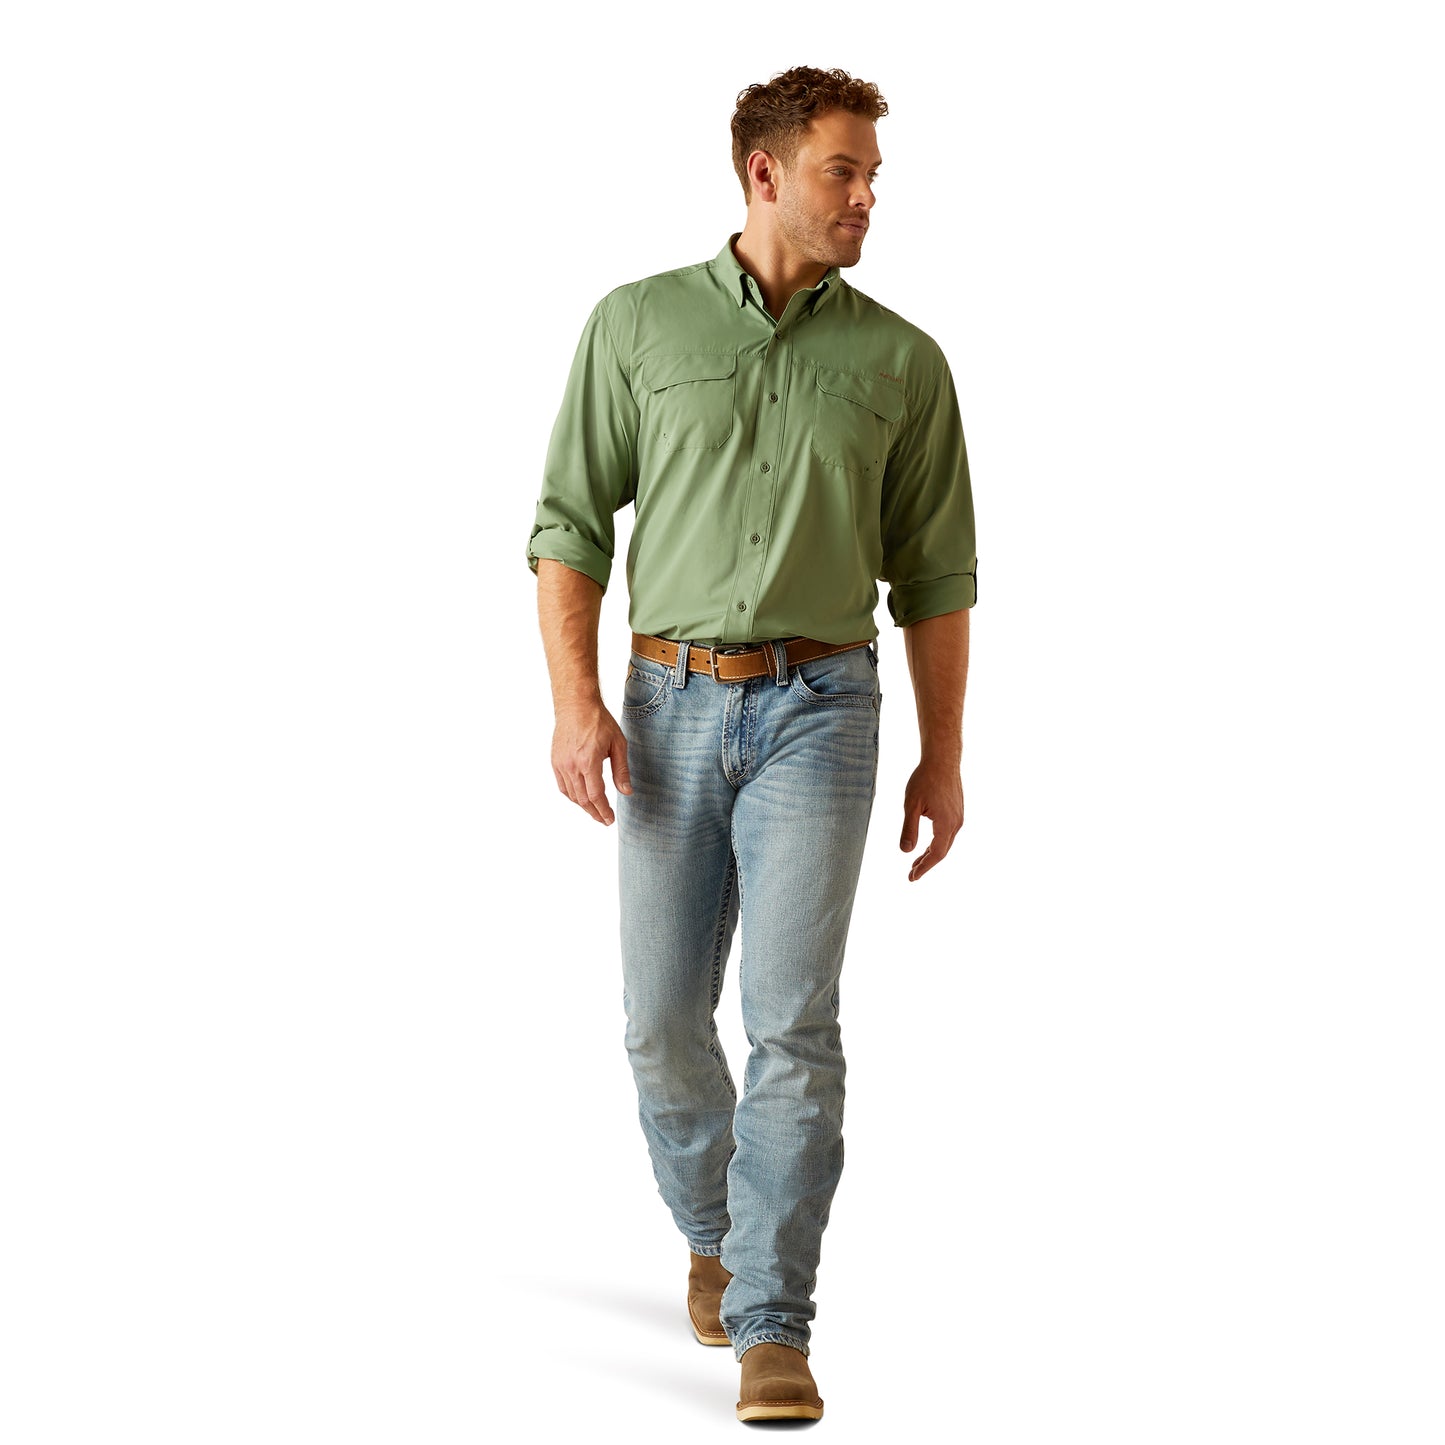 Ariat Men's VentTEK Outbound Parsley Green Classic Fit Shirt 10049014